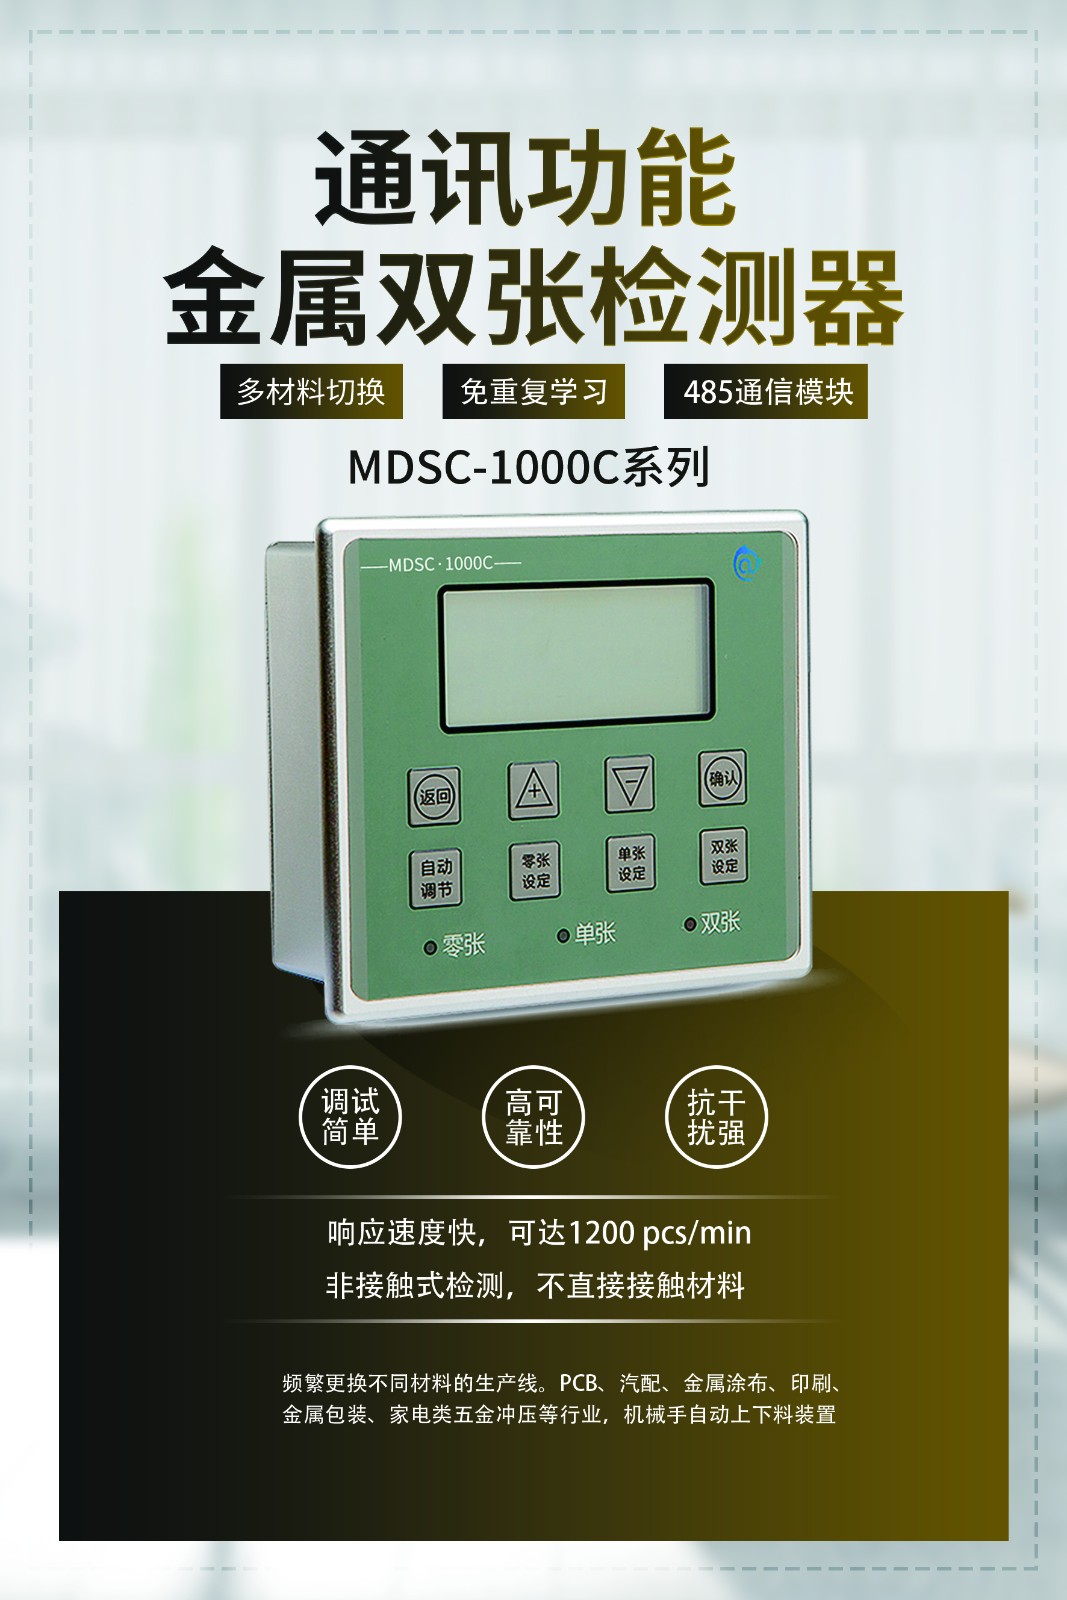 MDSC-1000C双张检测器